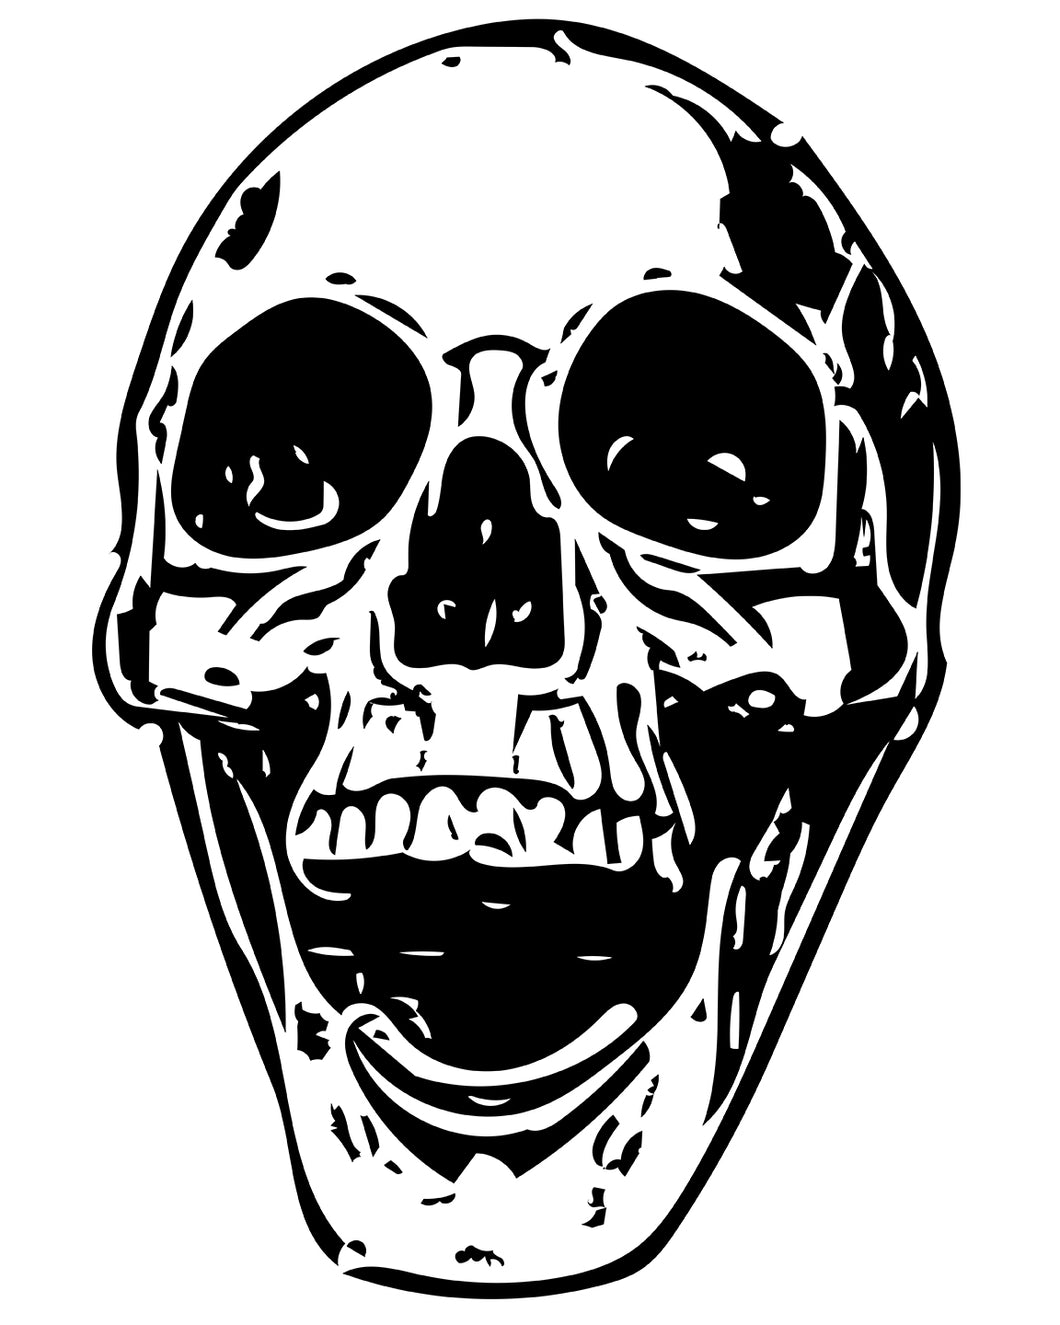 Free creepy halloween human skull printable coloring page â dark whimsical art